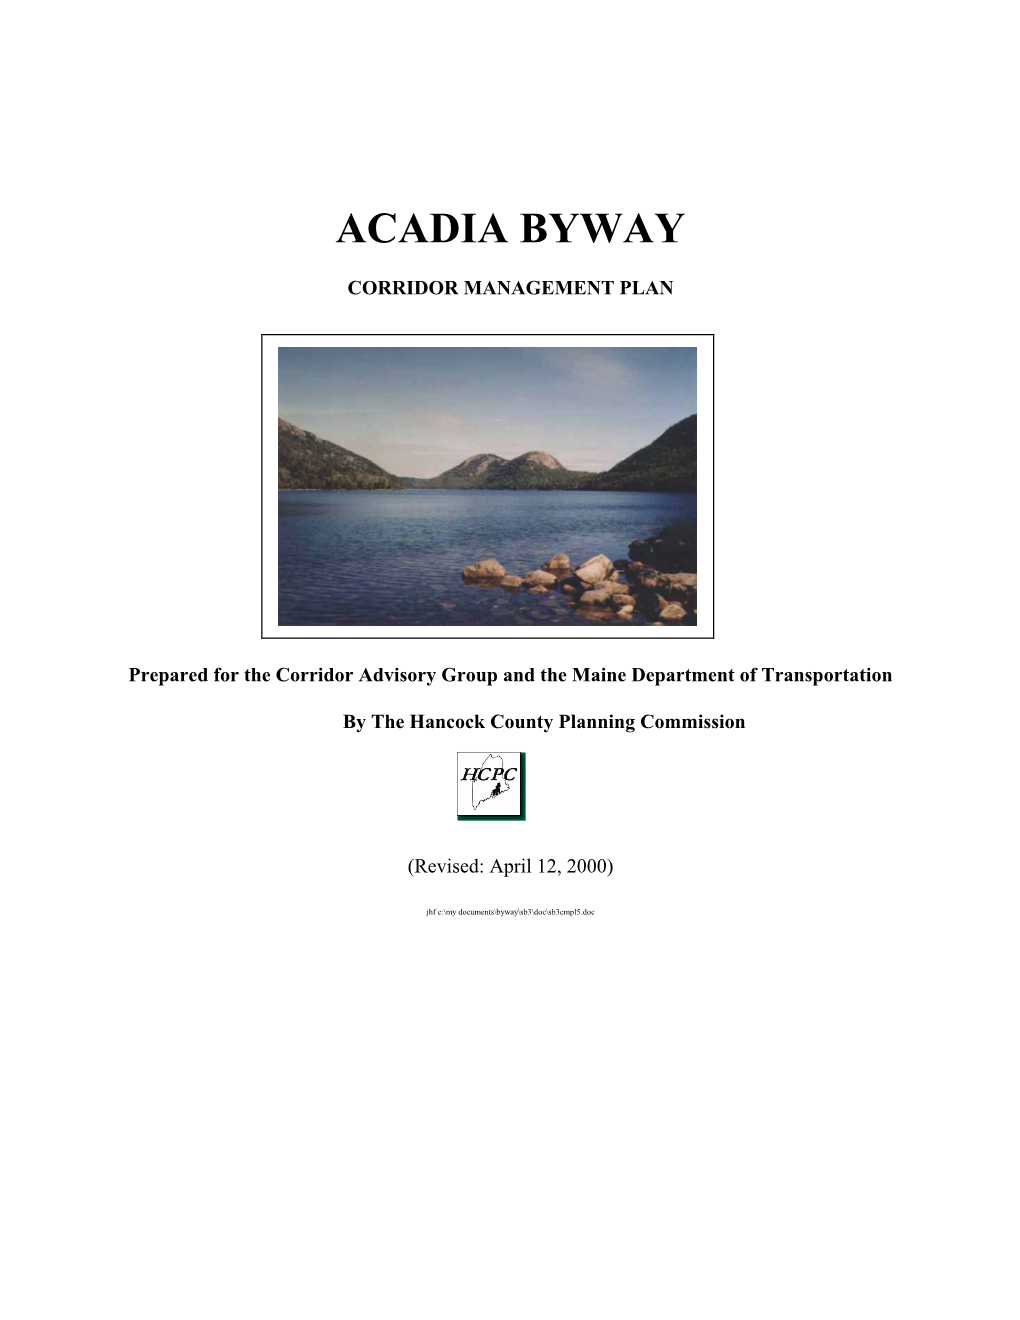 Acadia All American Road Corridor Management Plan